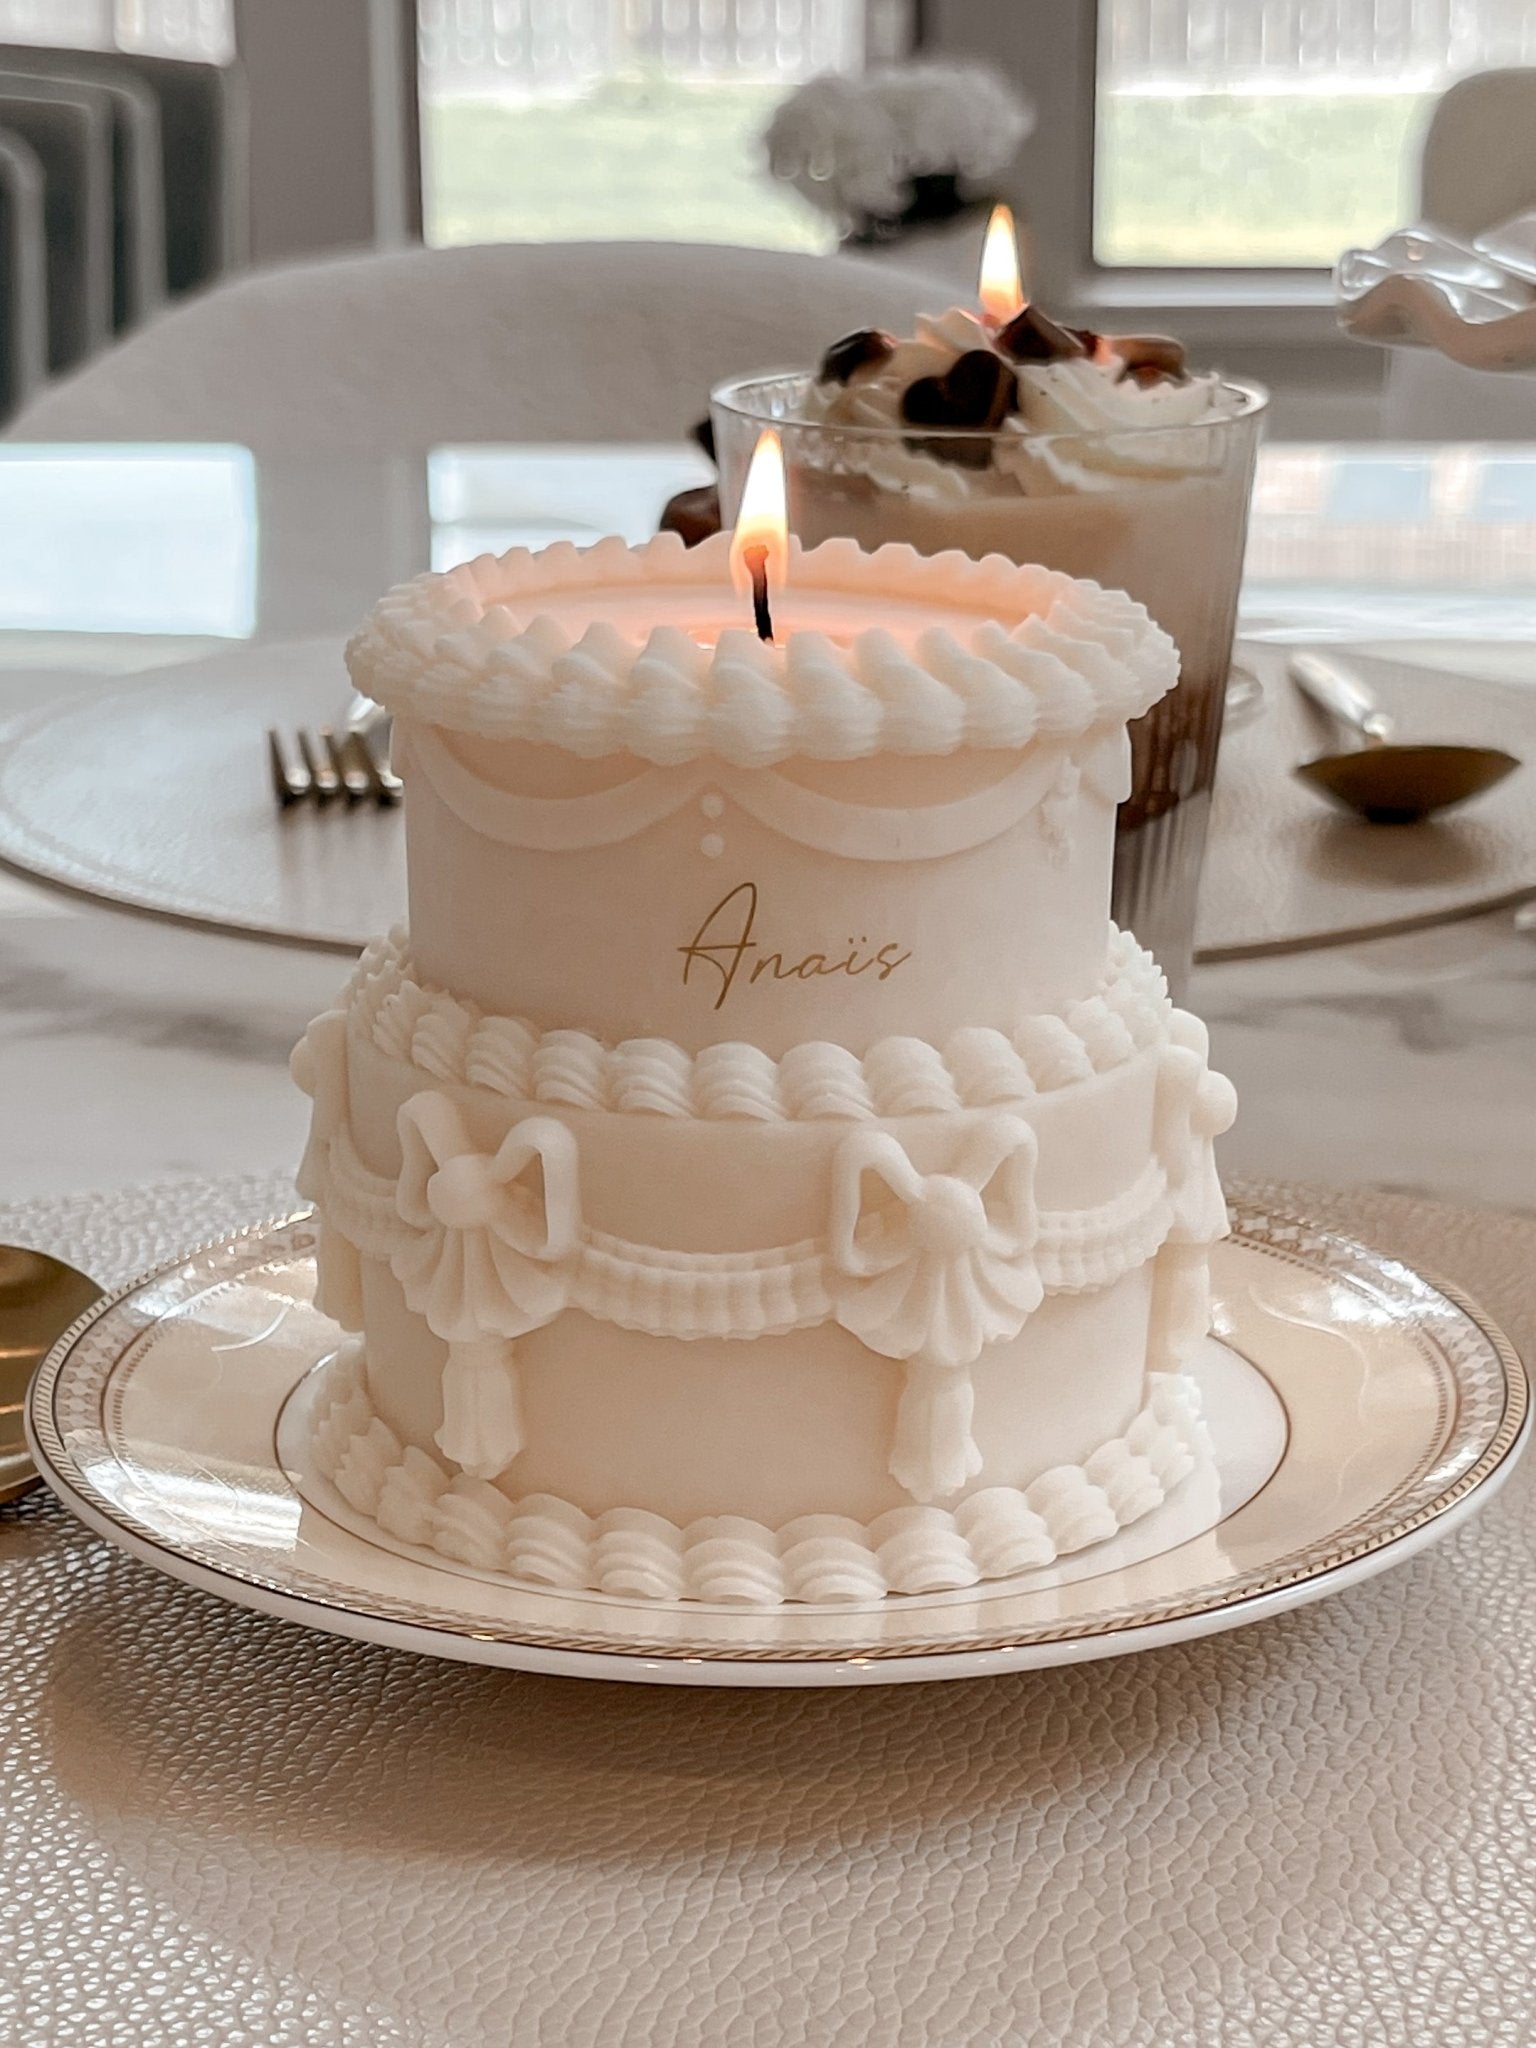 Melted Candle Cake Decorating Tutorial - YouTube